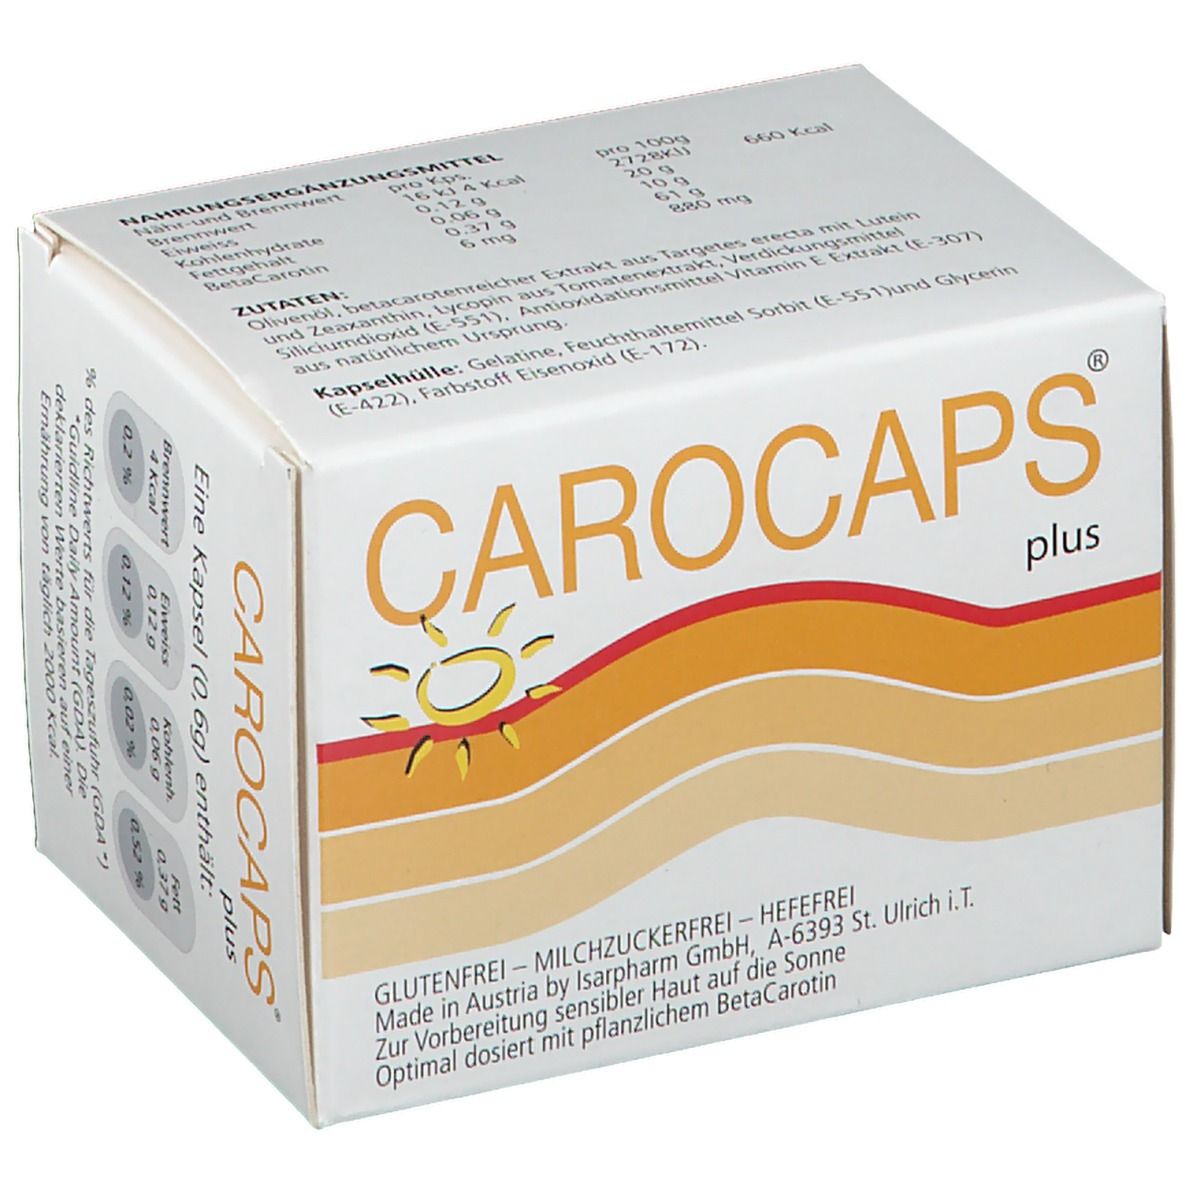 Carocaps 100 Plus Kapseln